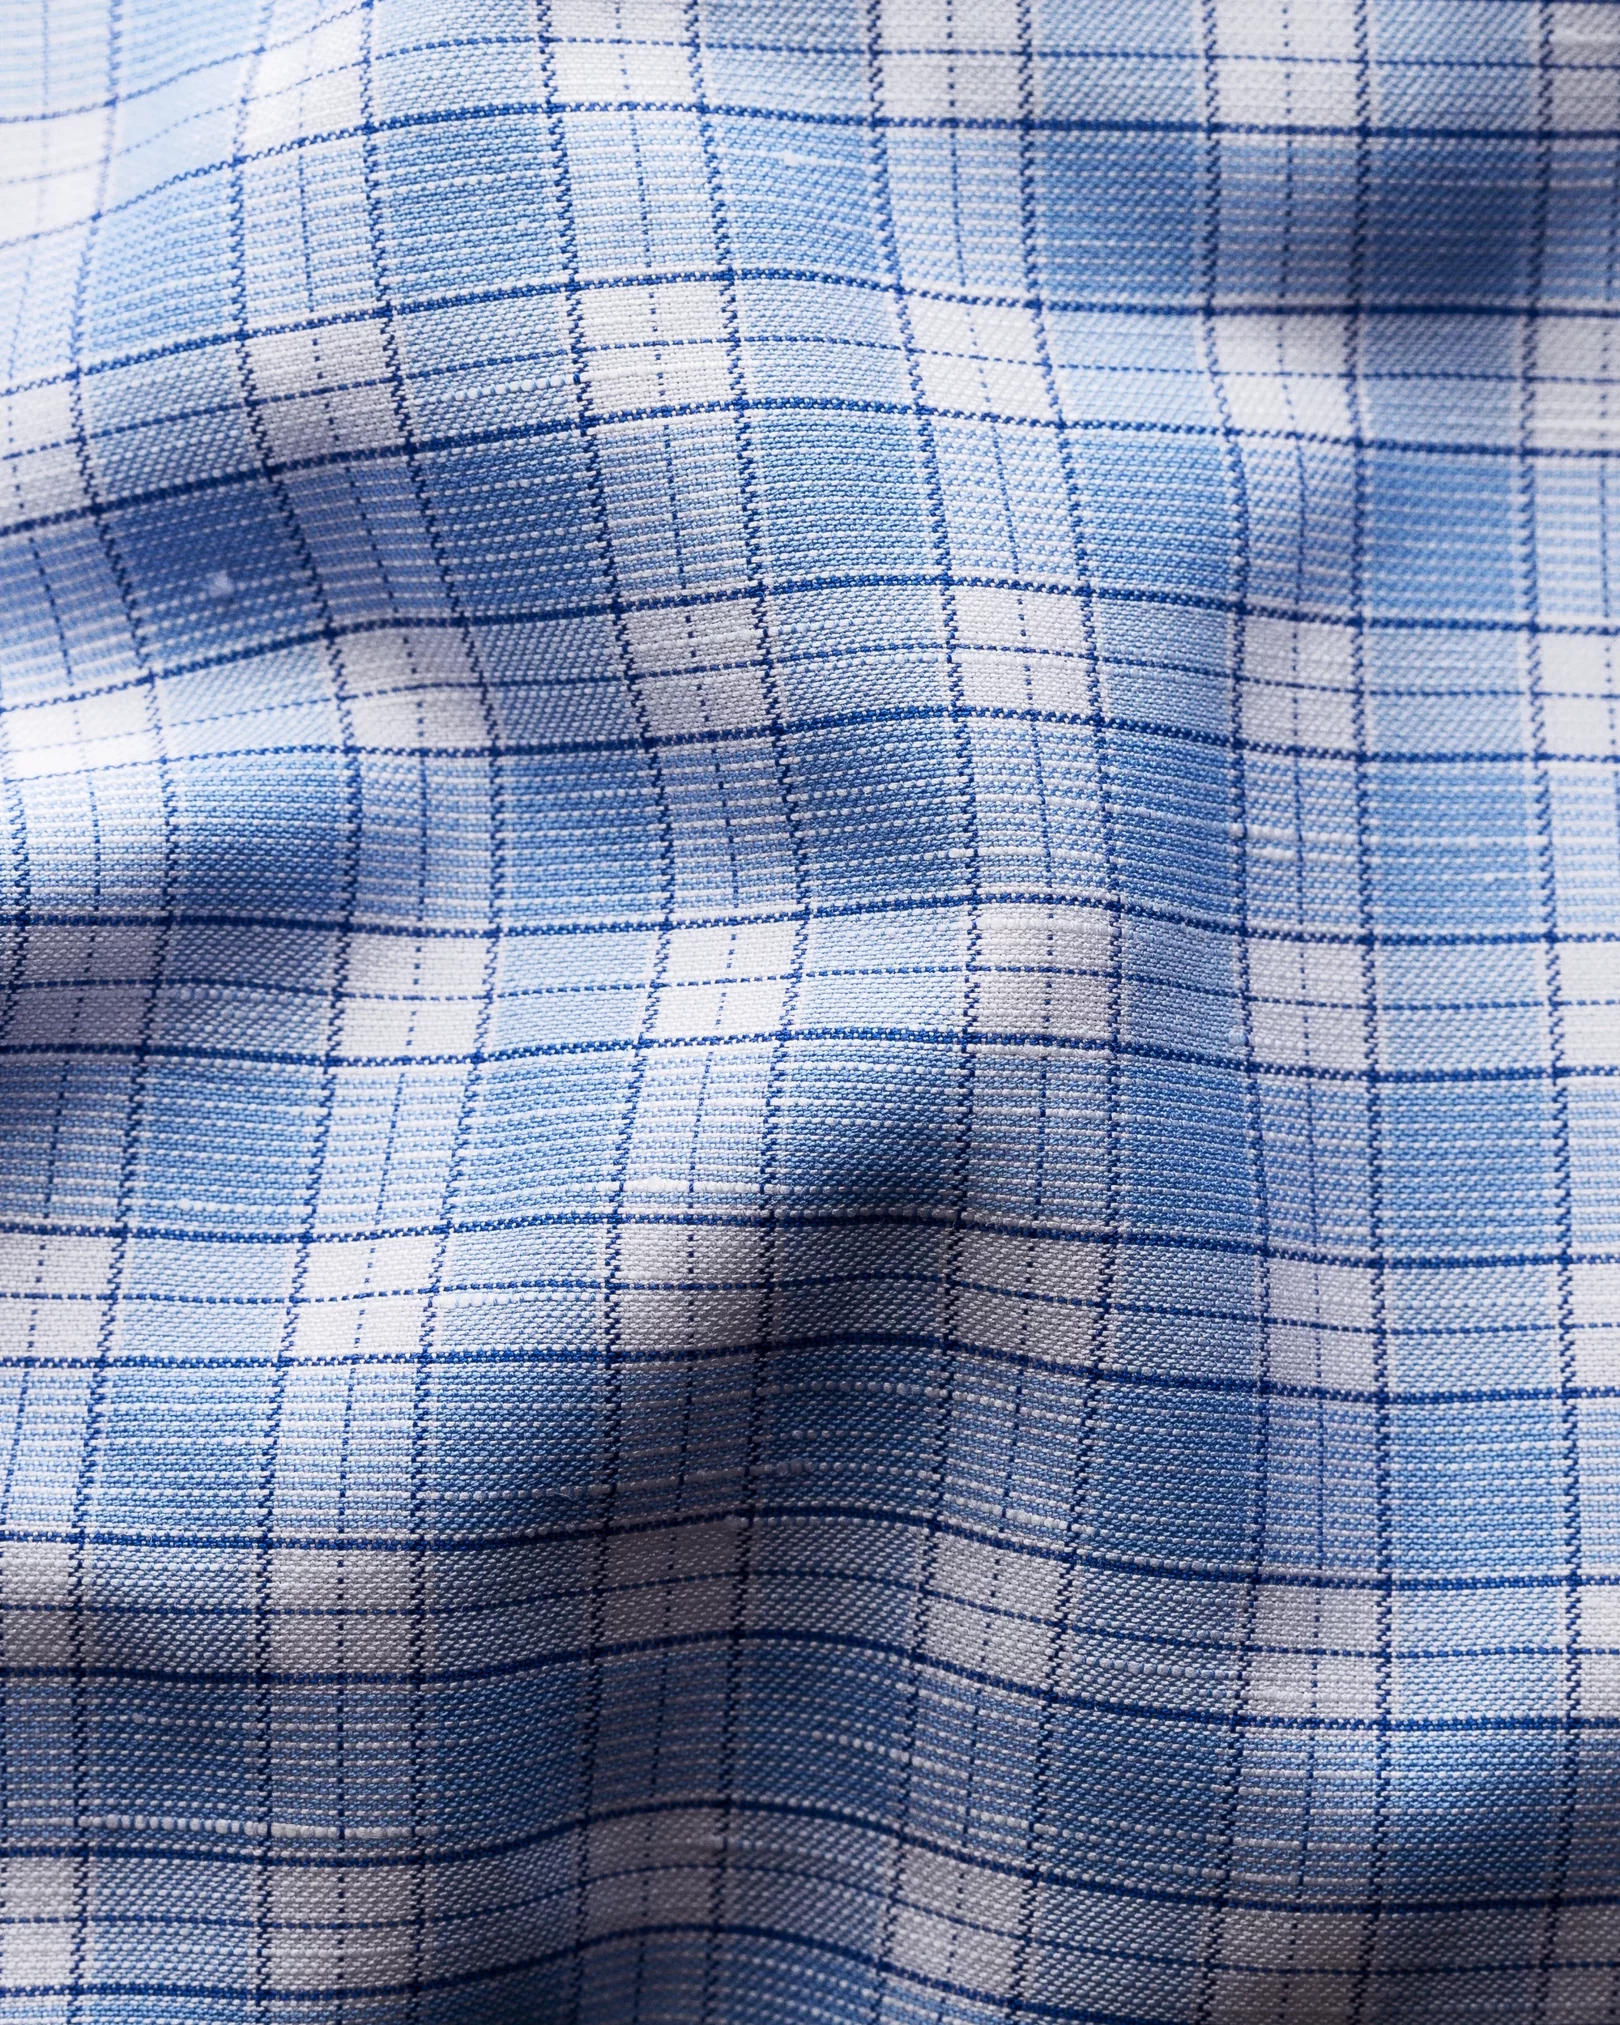 Eton - blue checked cotton and linen shirt